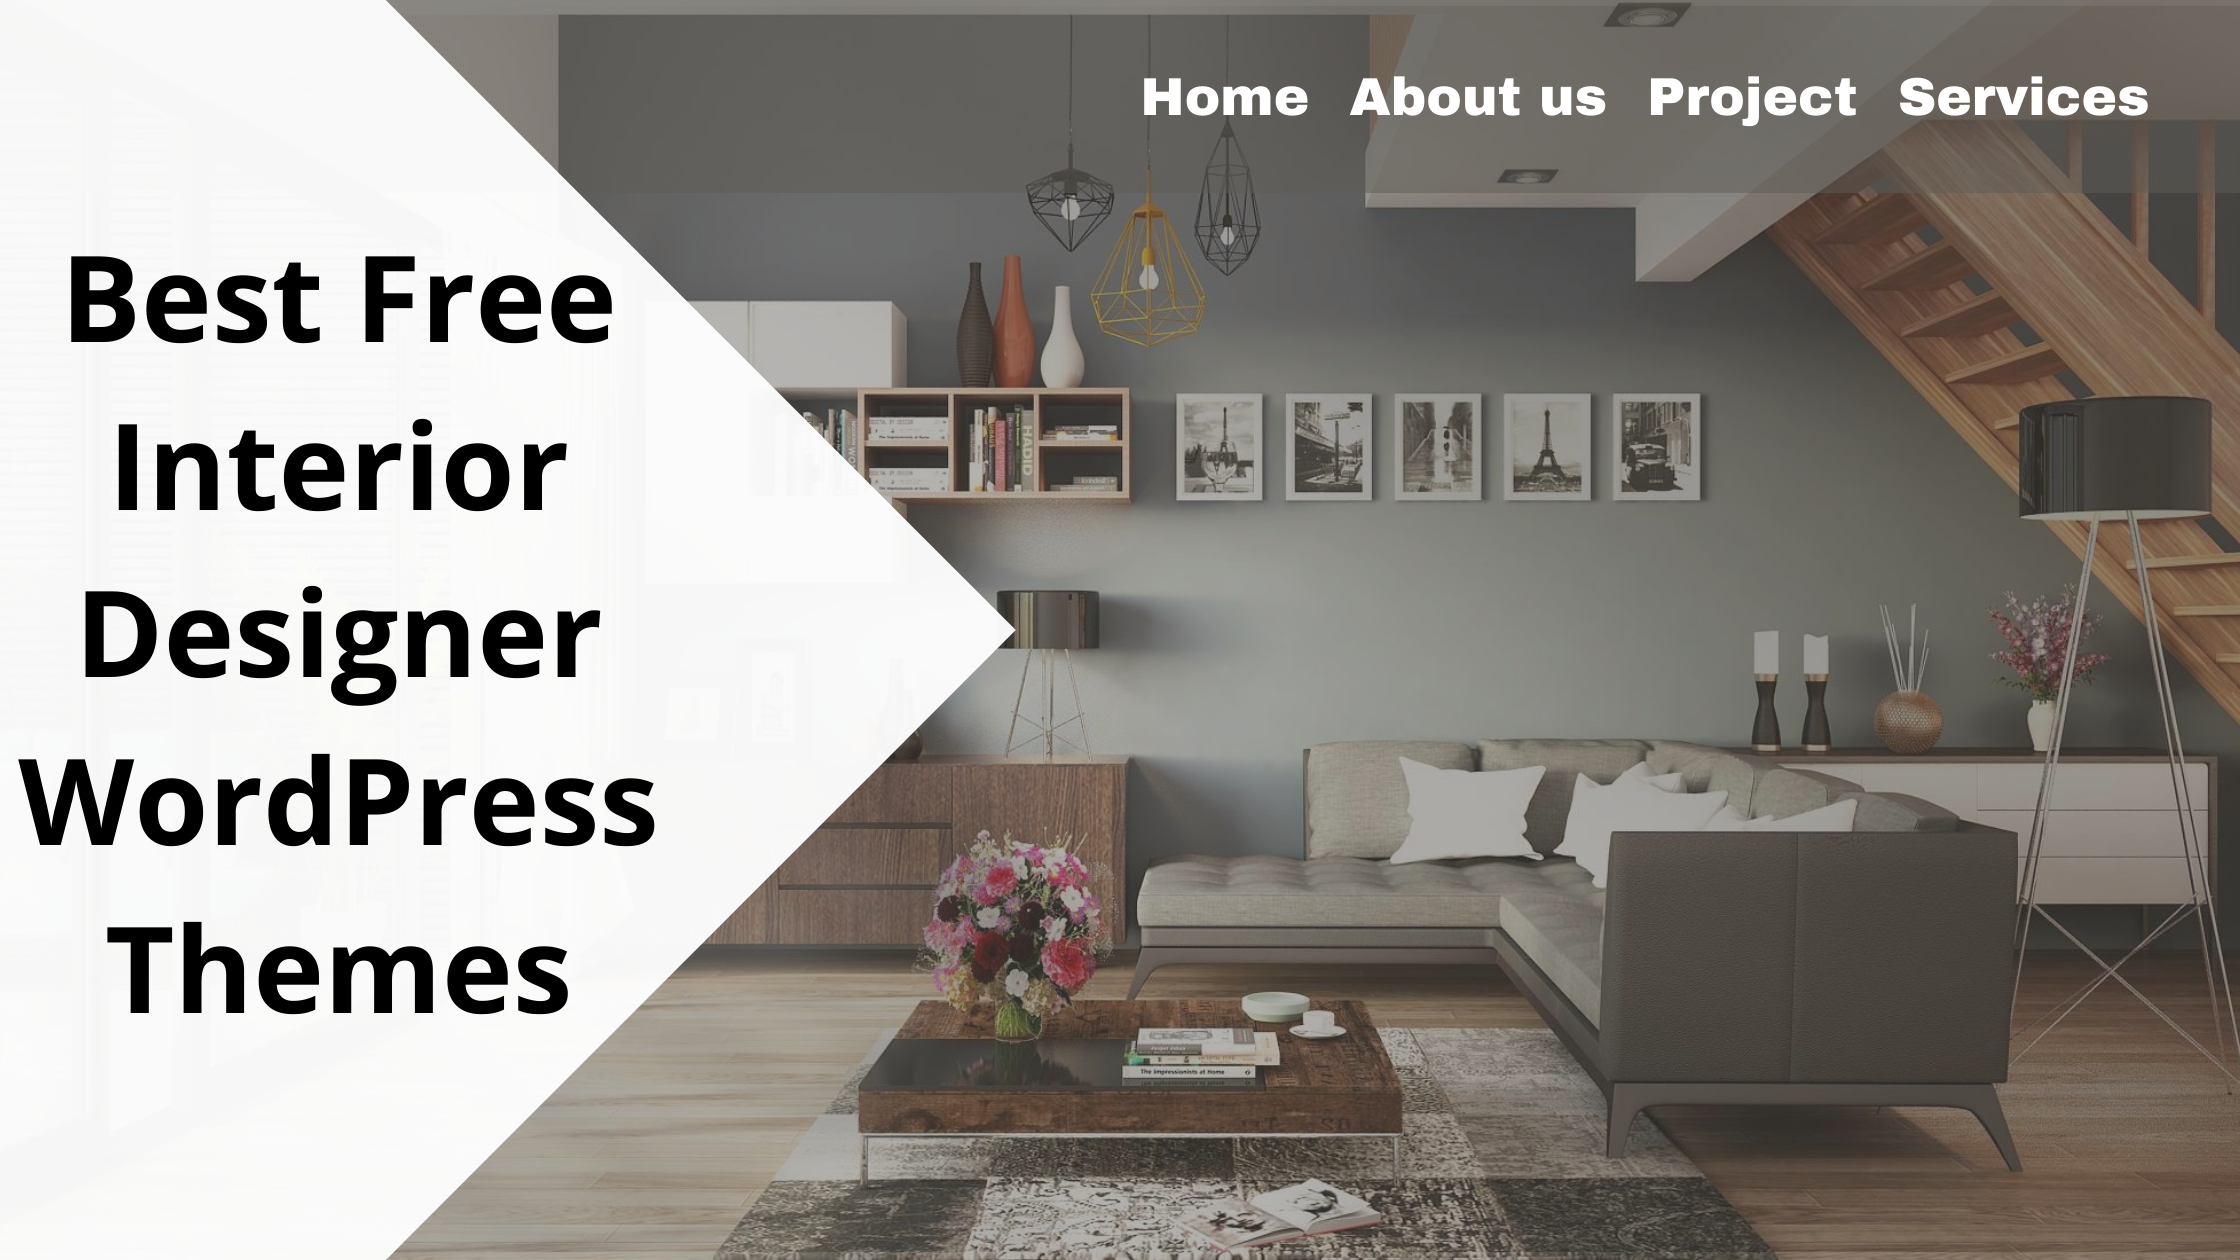 Best Free Interior Designer WordPress Themes